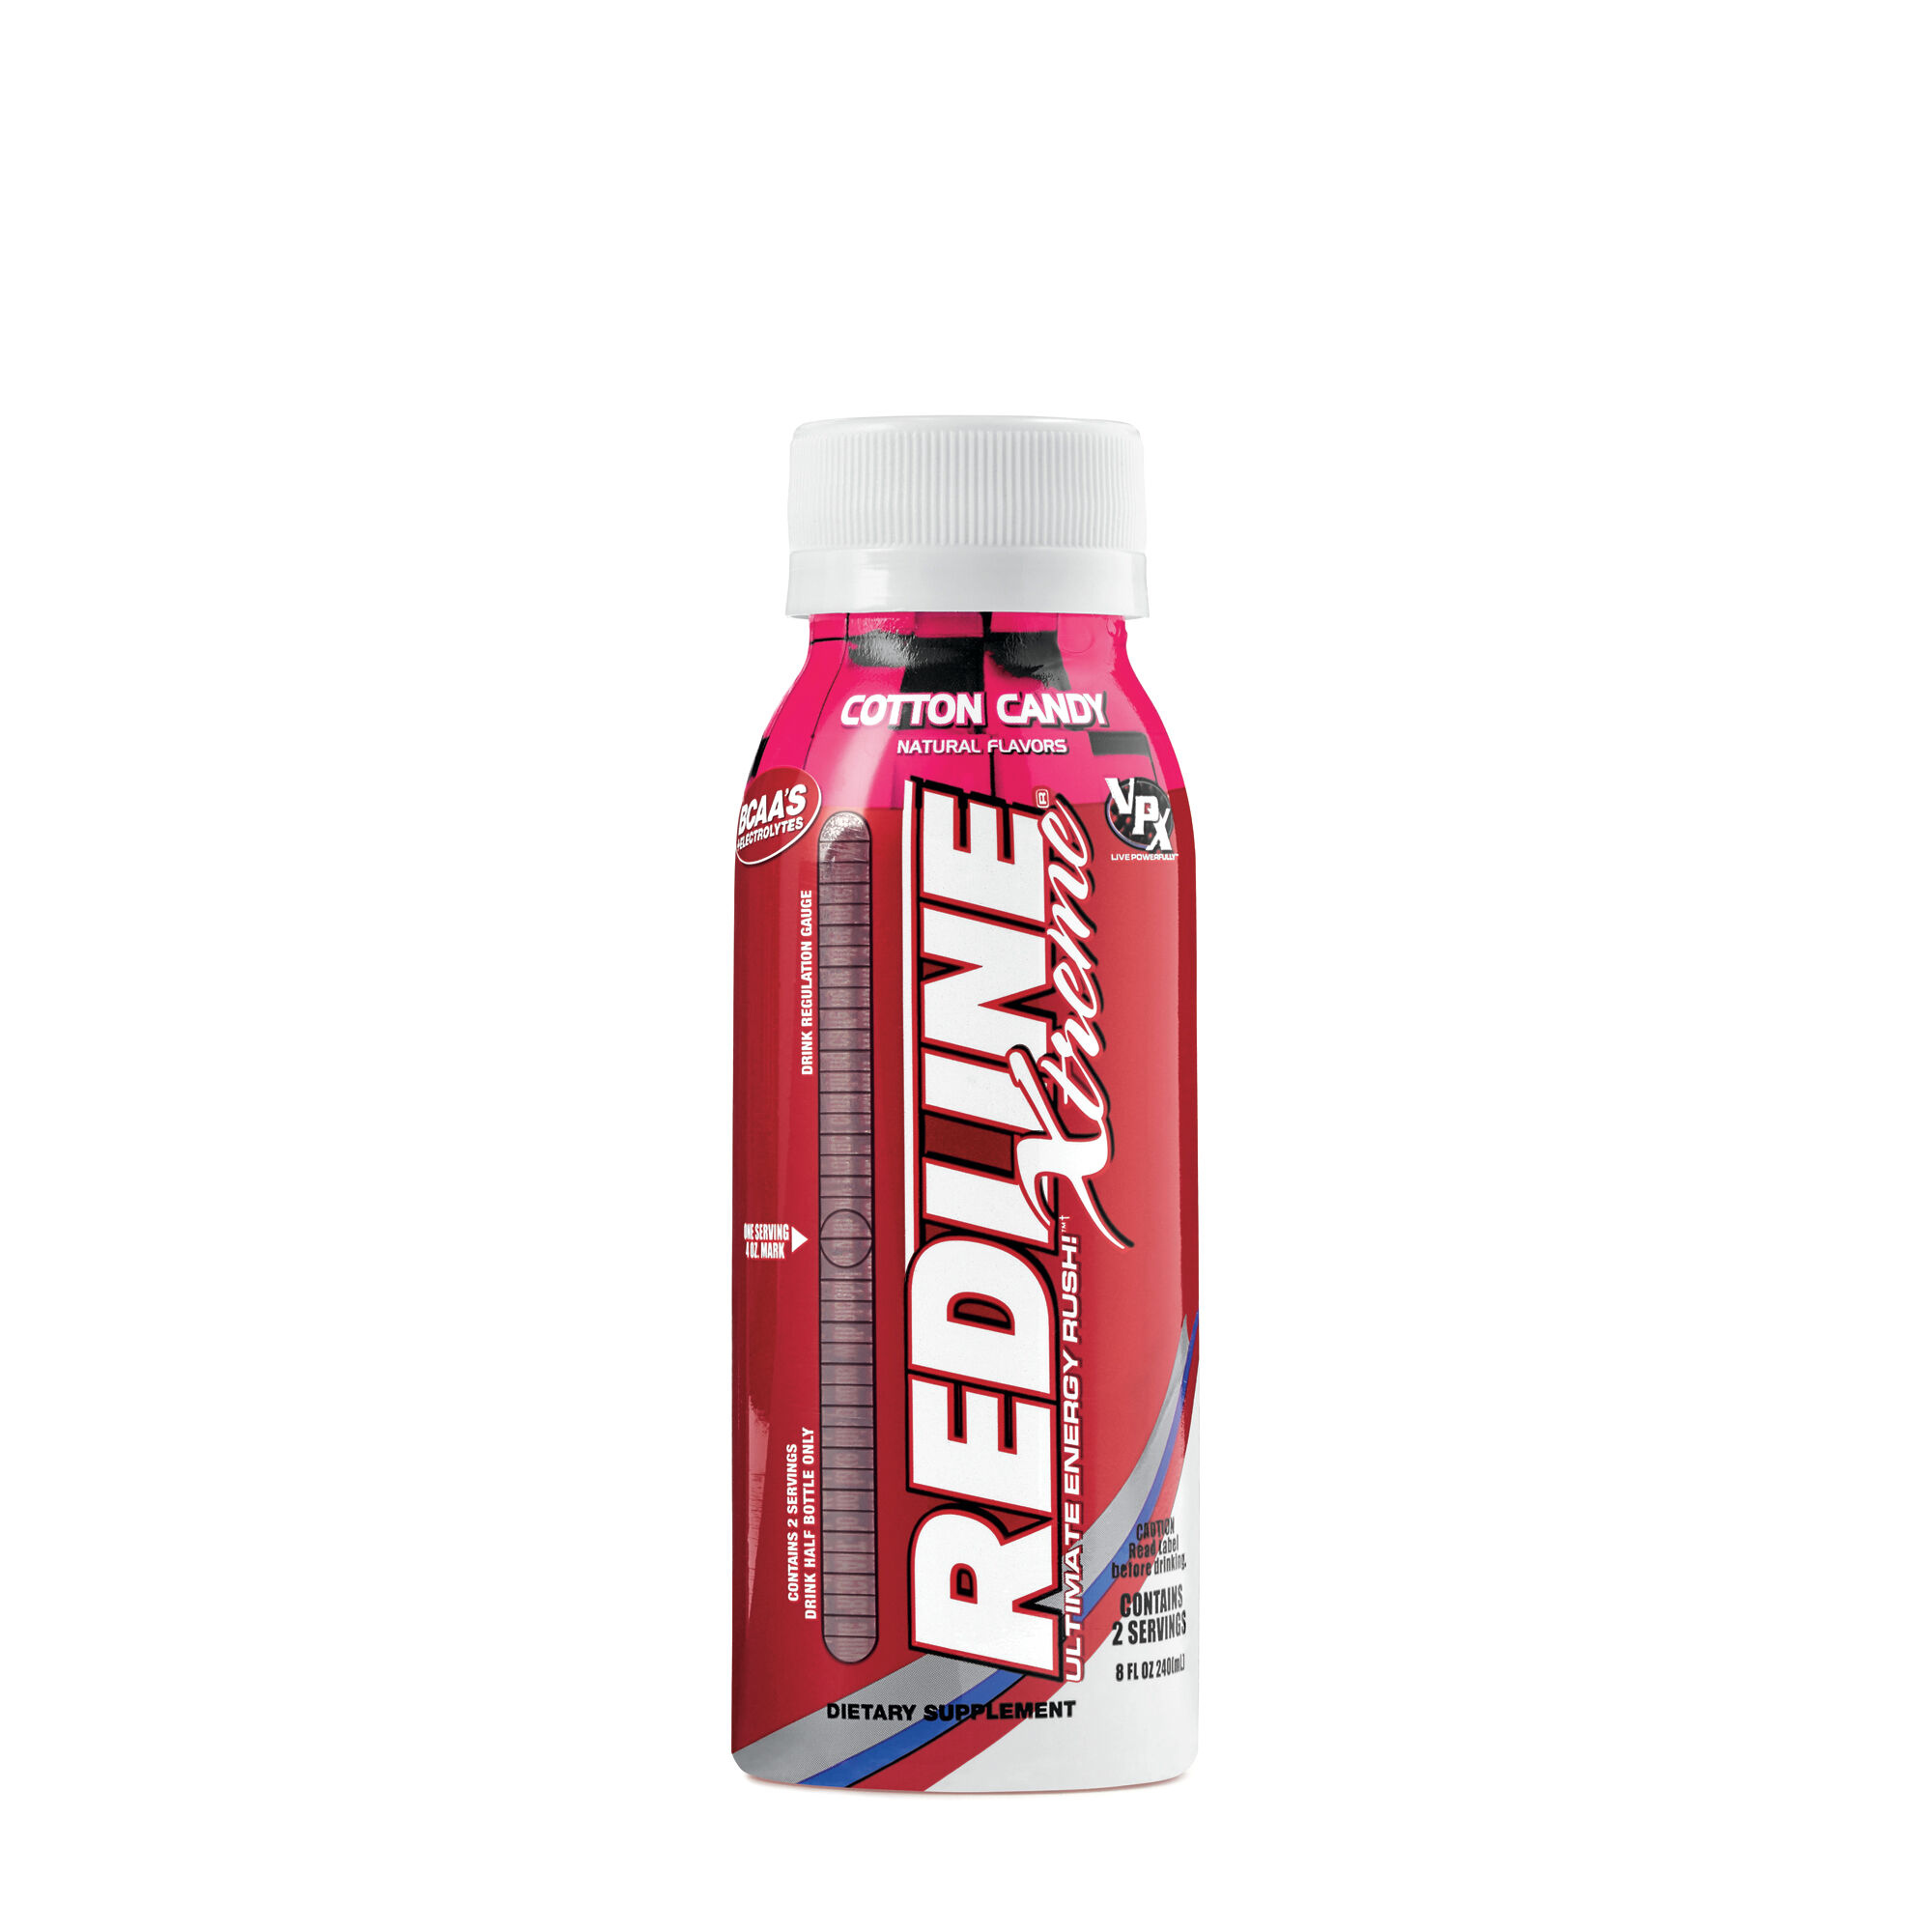 redline xtreme energy drink